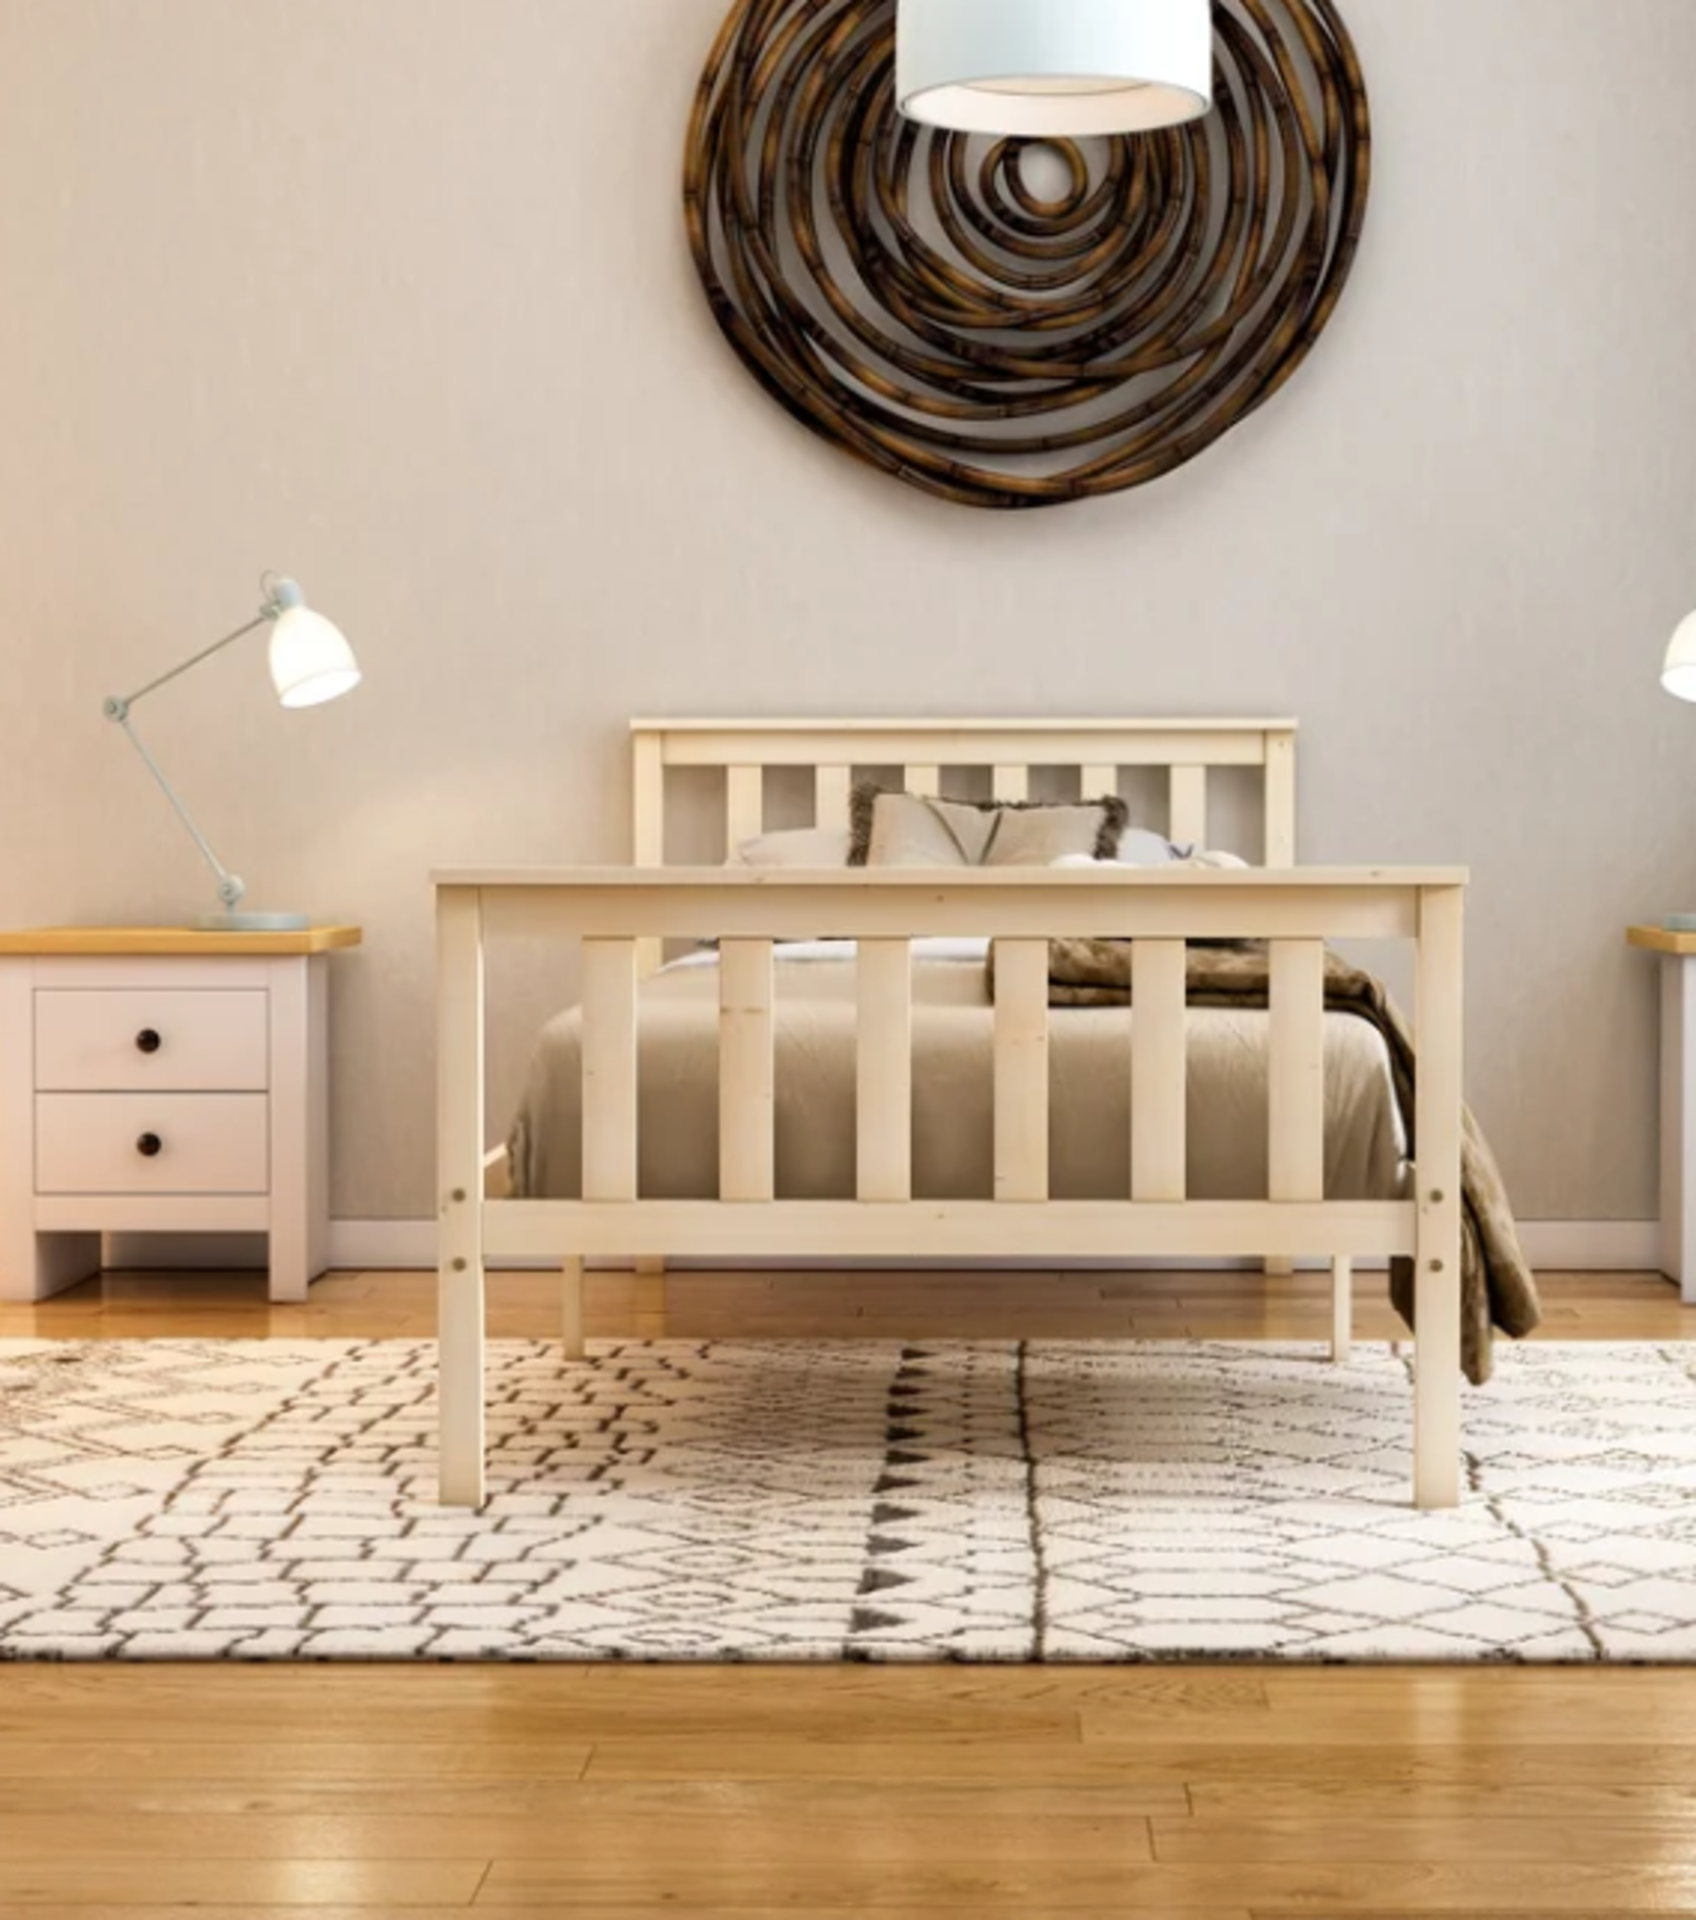 Vida Designs Milan Bed Frame. RRP £119.99. Natural Wood Grain Color Variation (No item has the